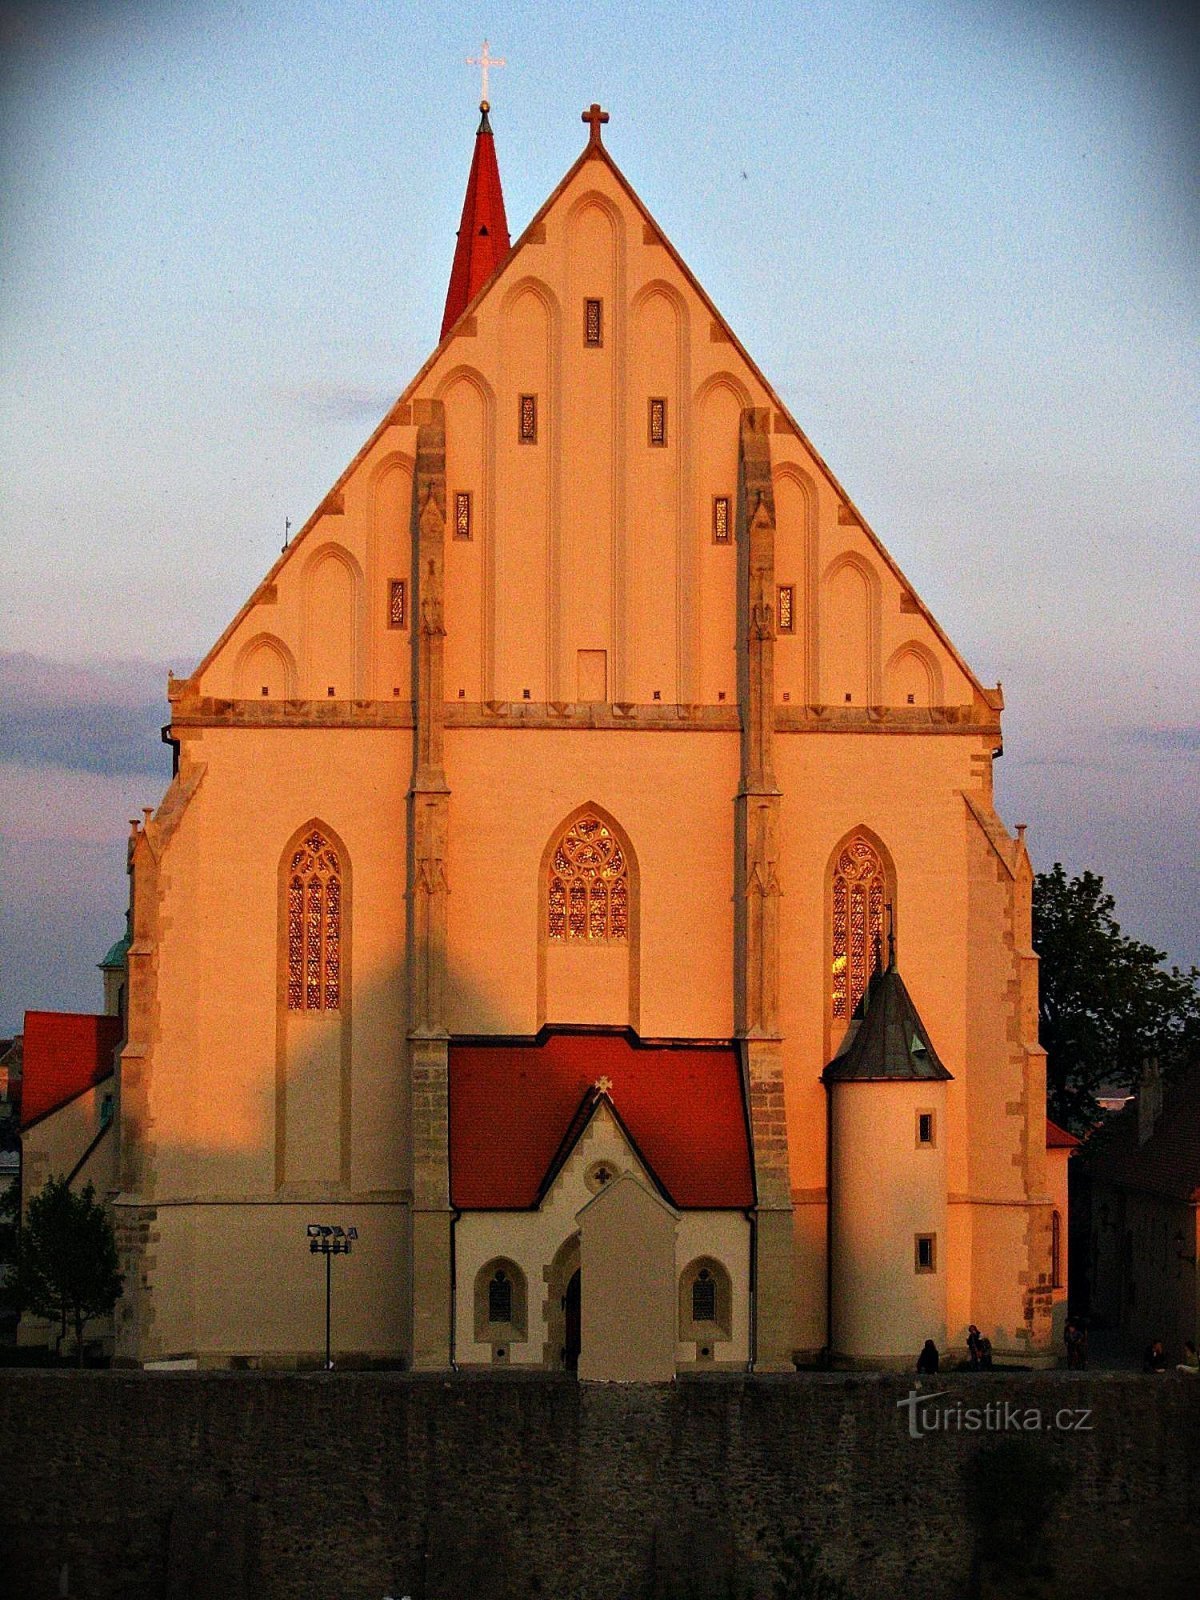 La iglesia más hermosa de Znojmo